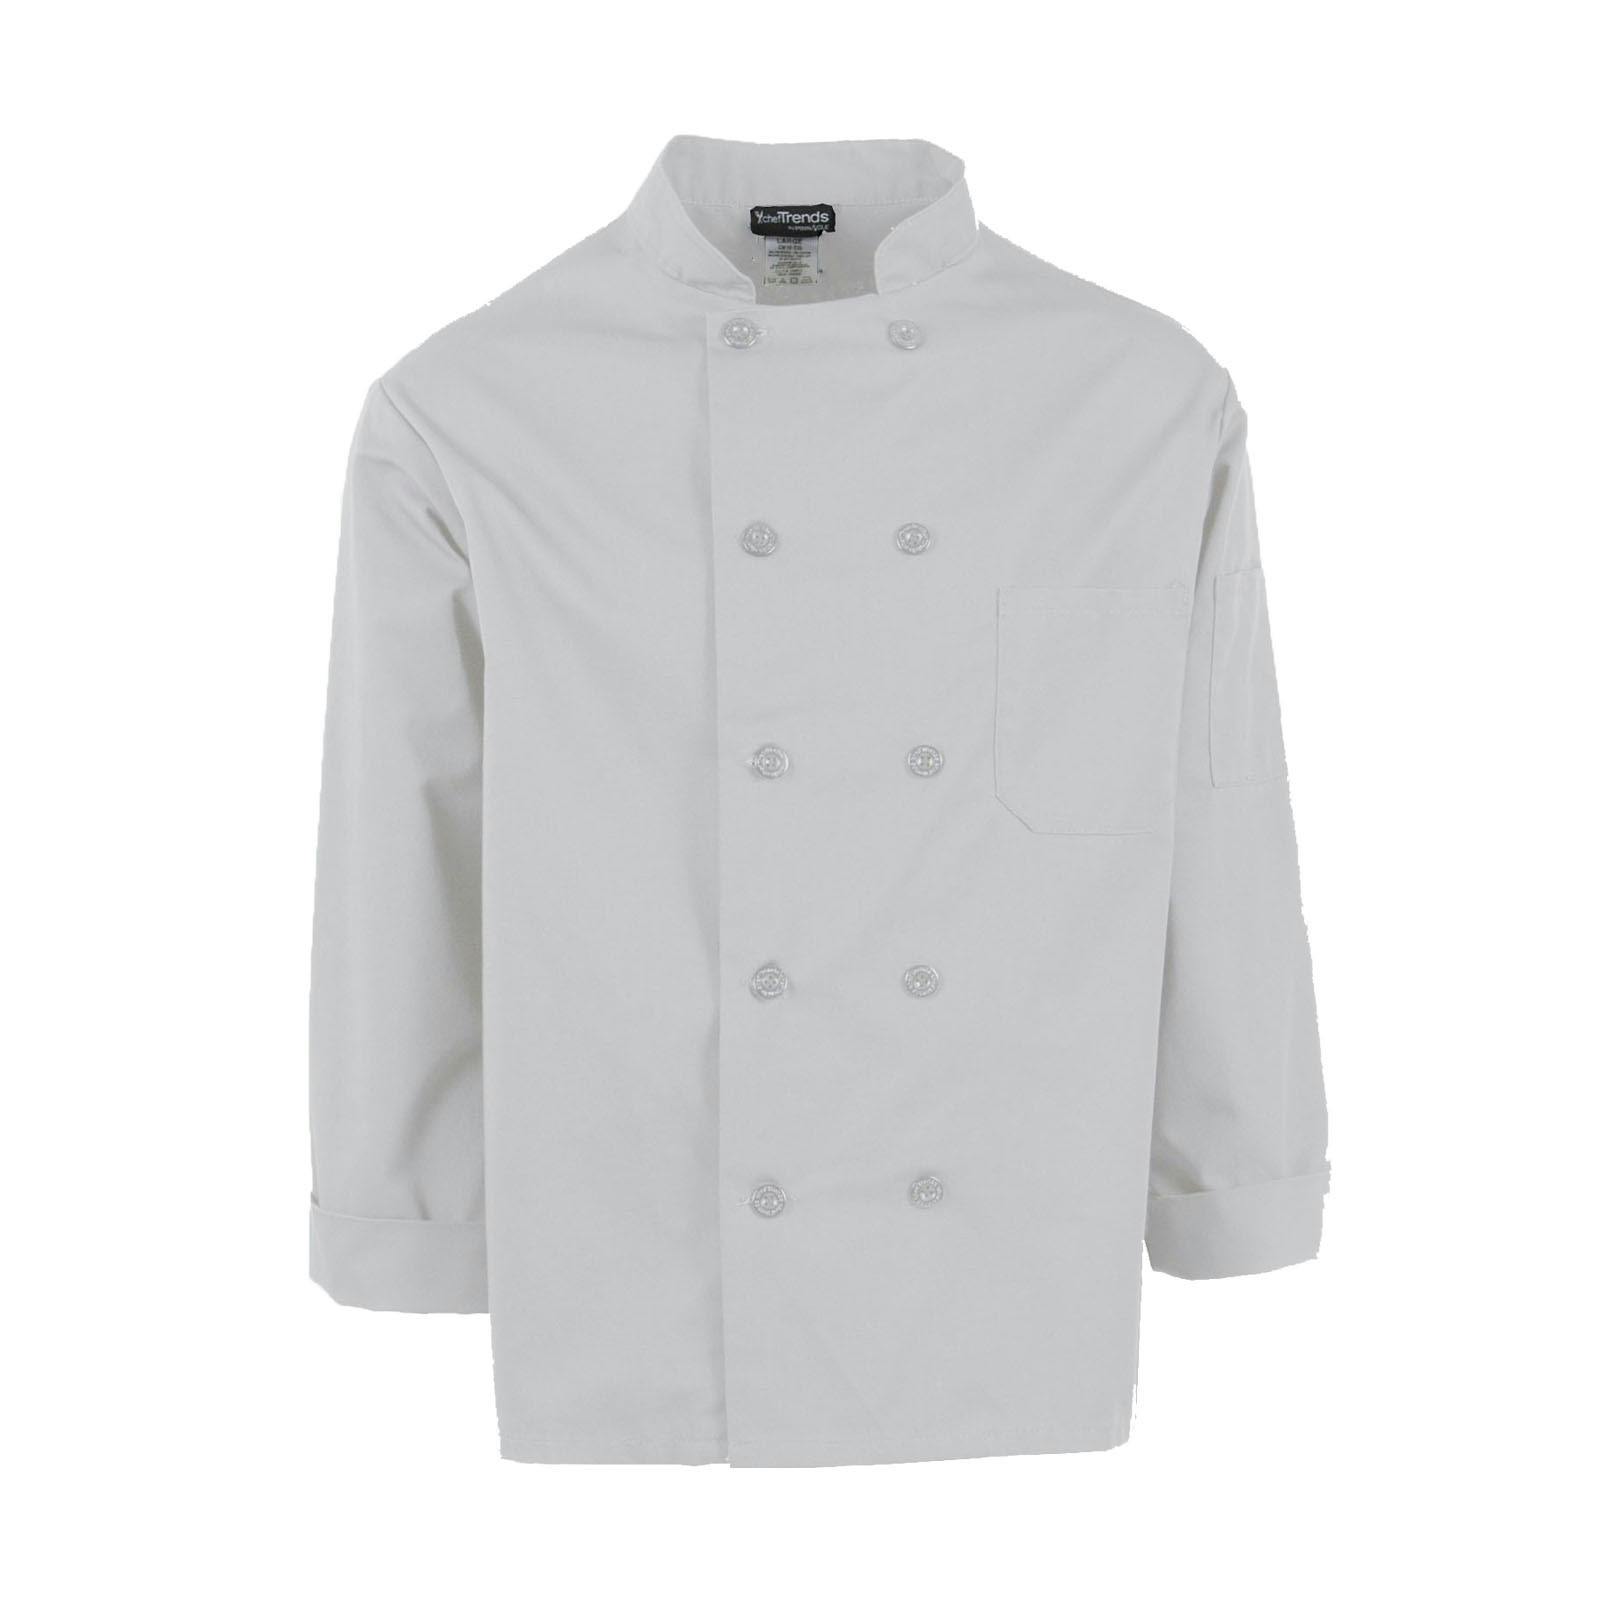 Pinnacle Long-Sleeve White Chef Coat